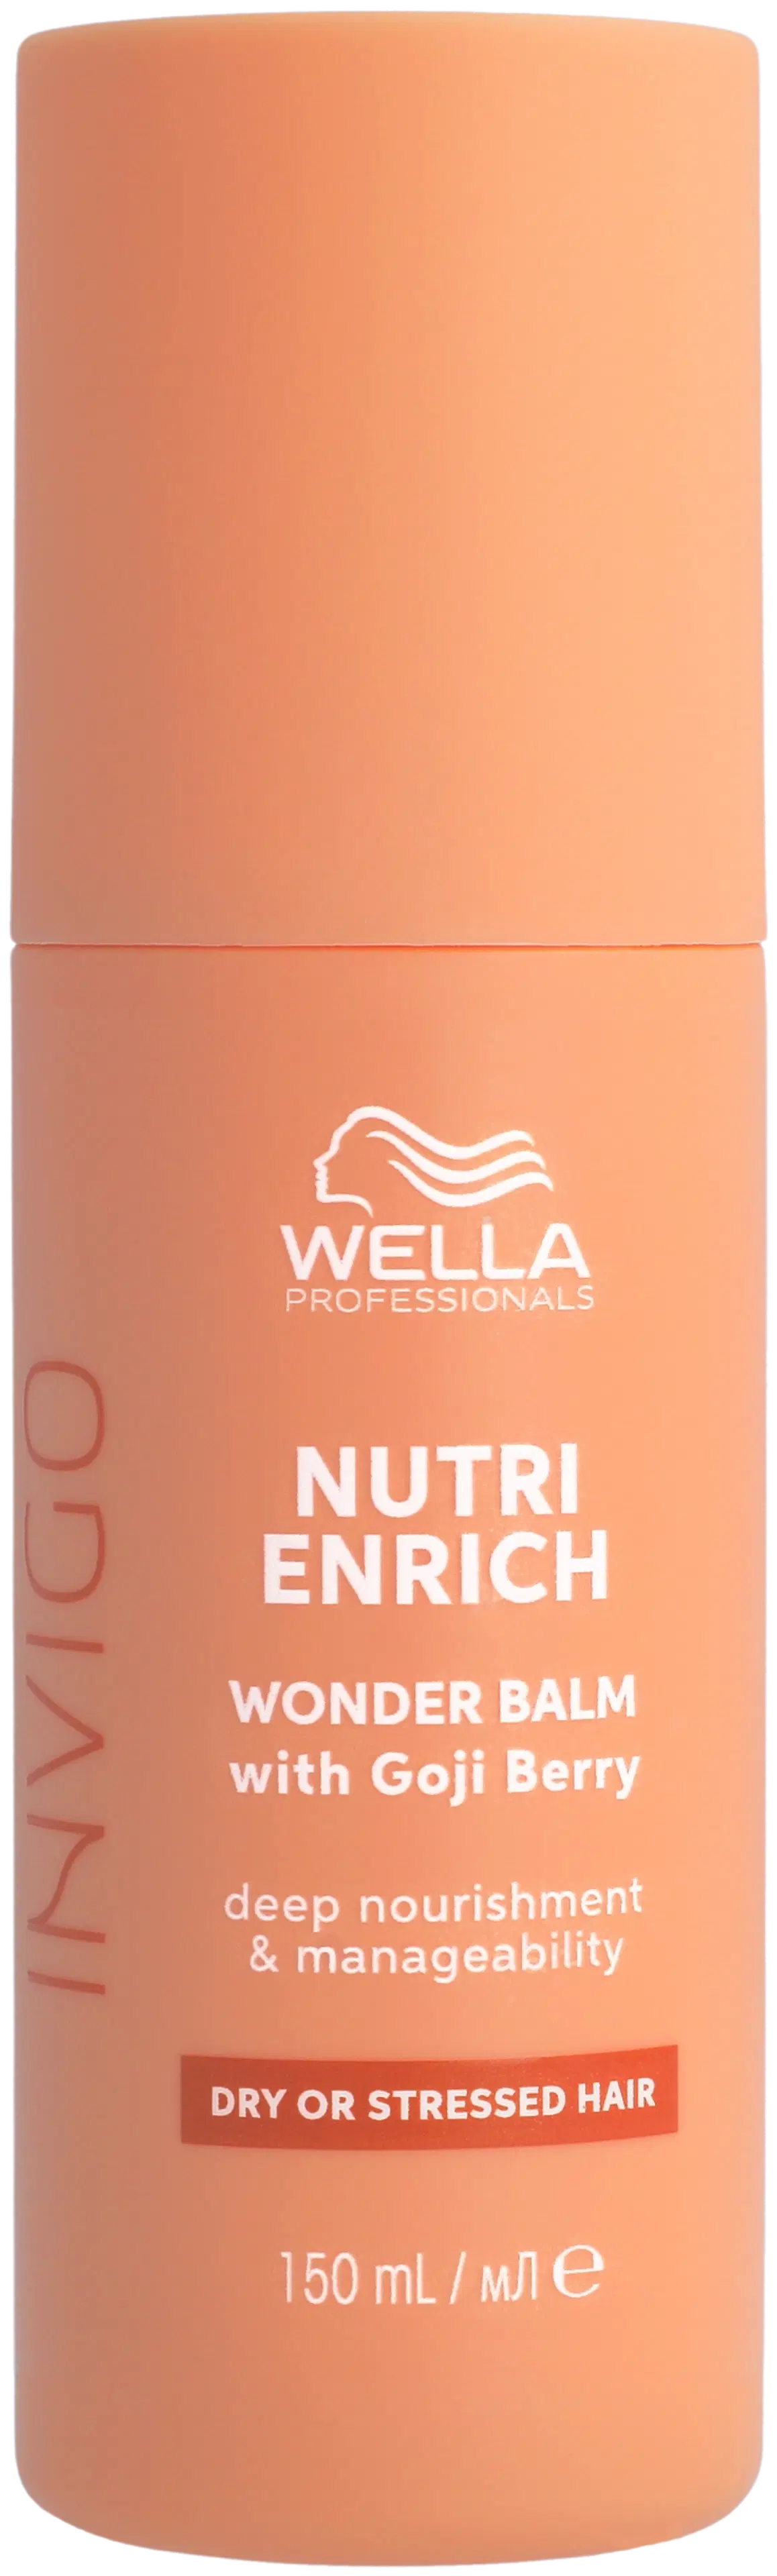 Wella Professional Nutri Enrich Daily Balm hiusnaamio 150 ml